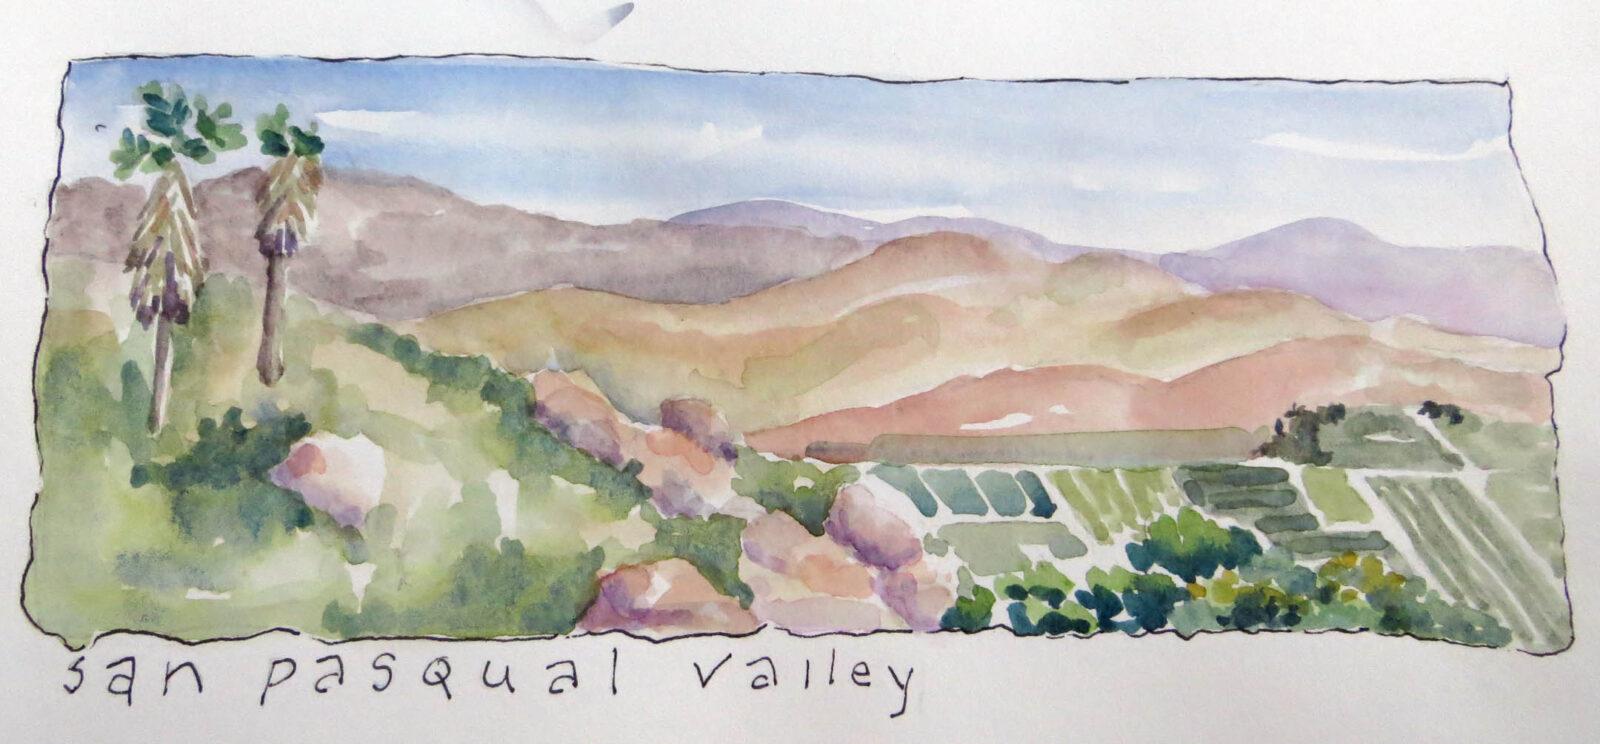 Jane LaFazio - San Pasqual Valley